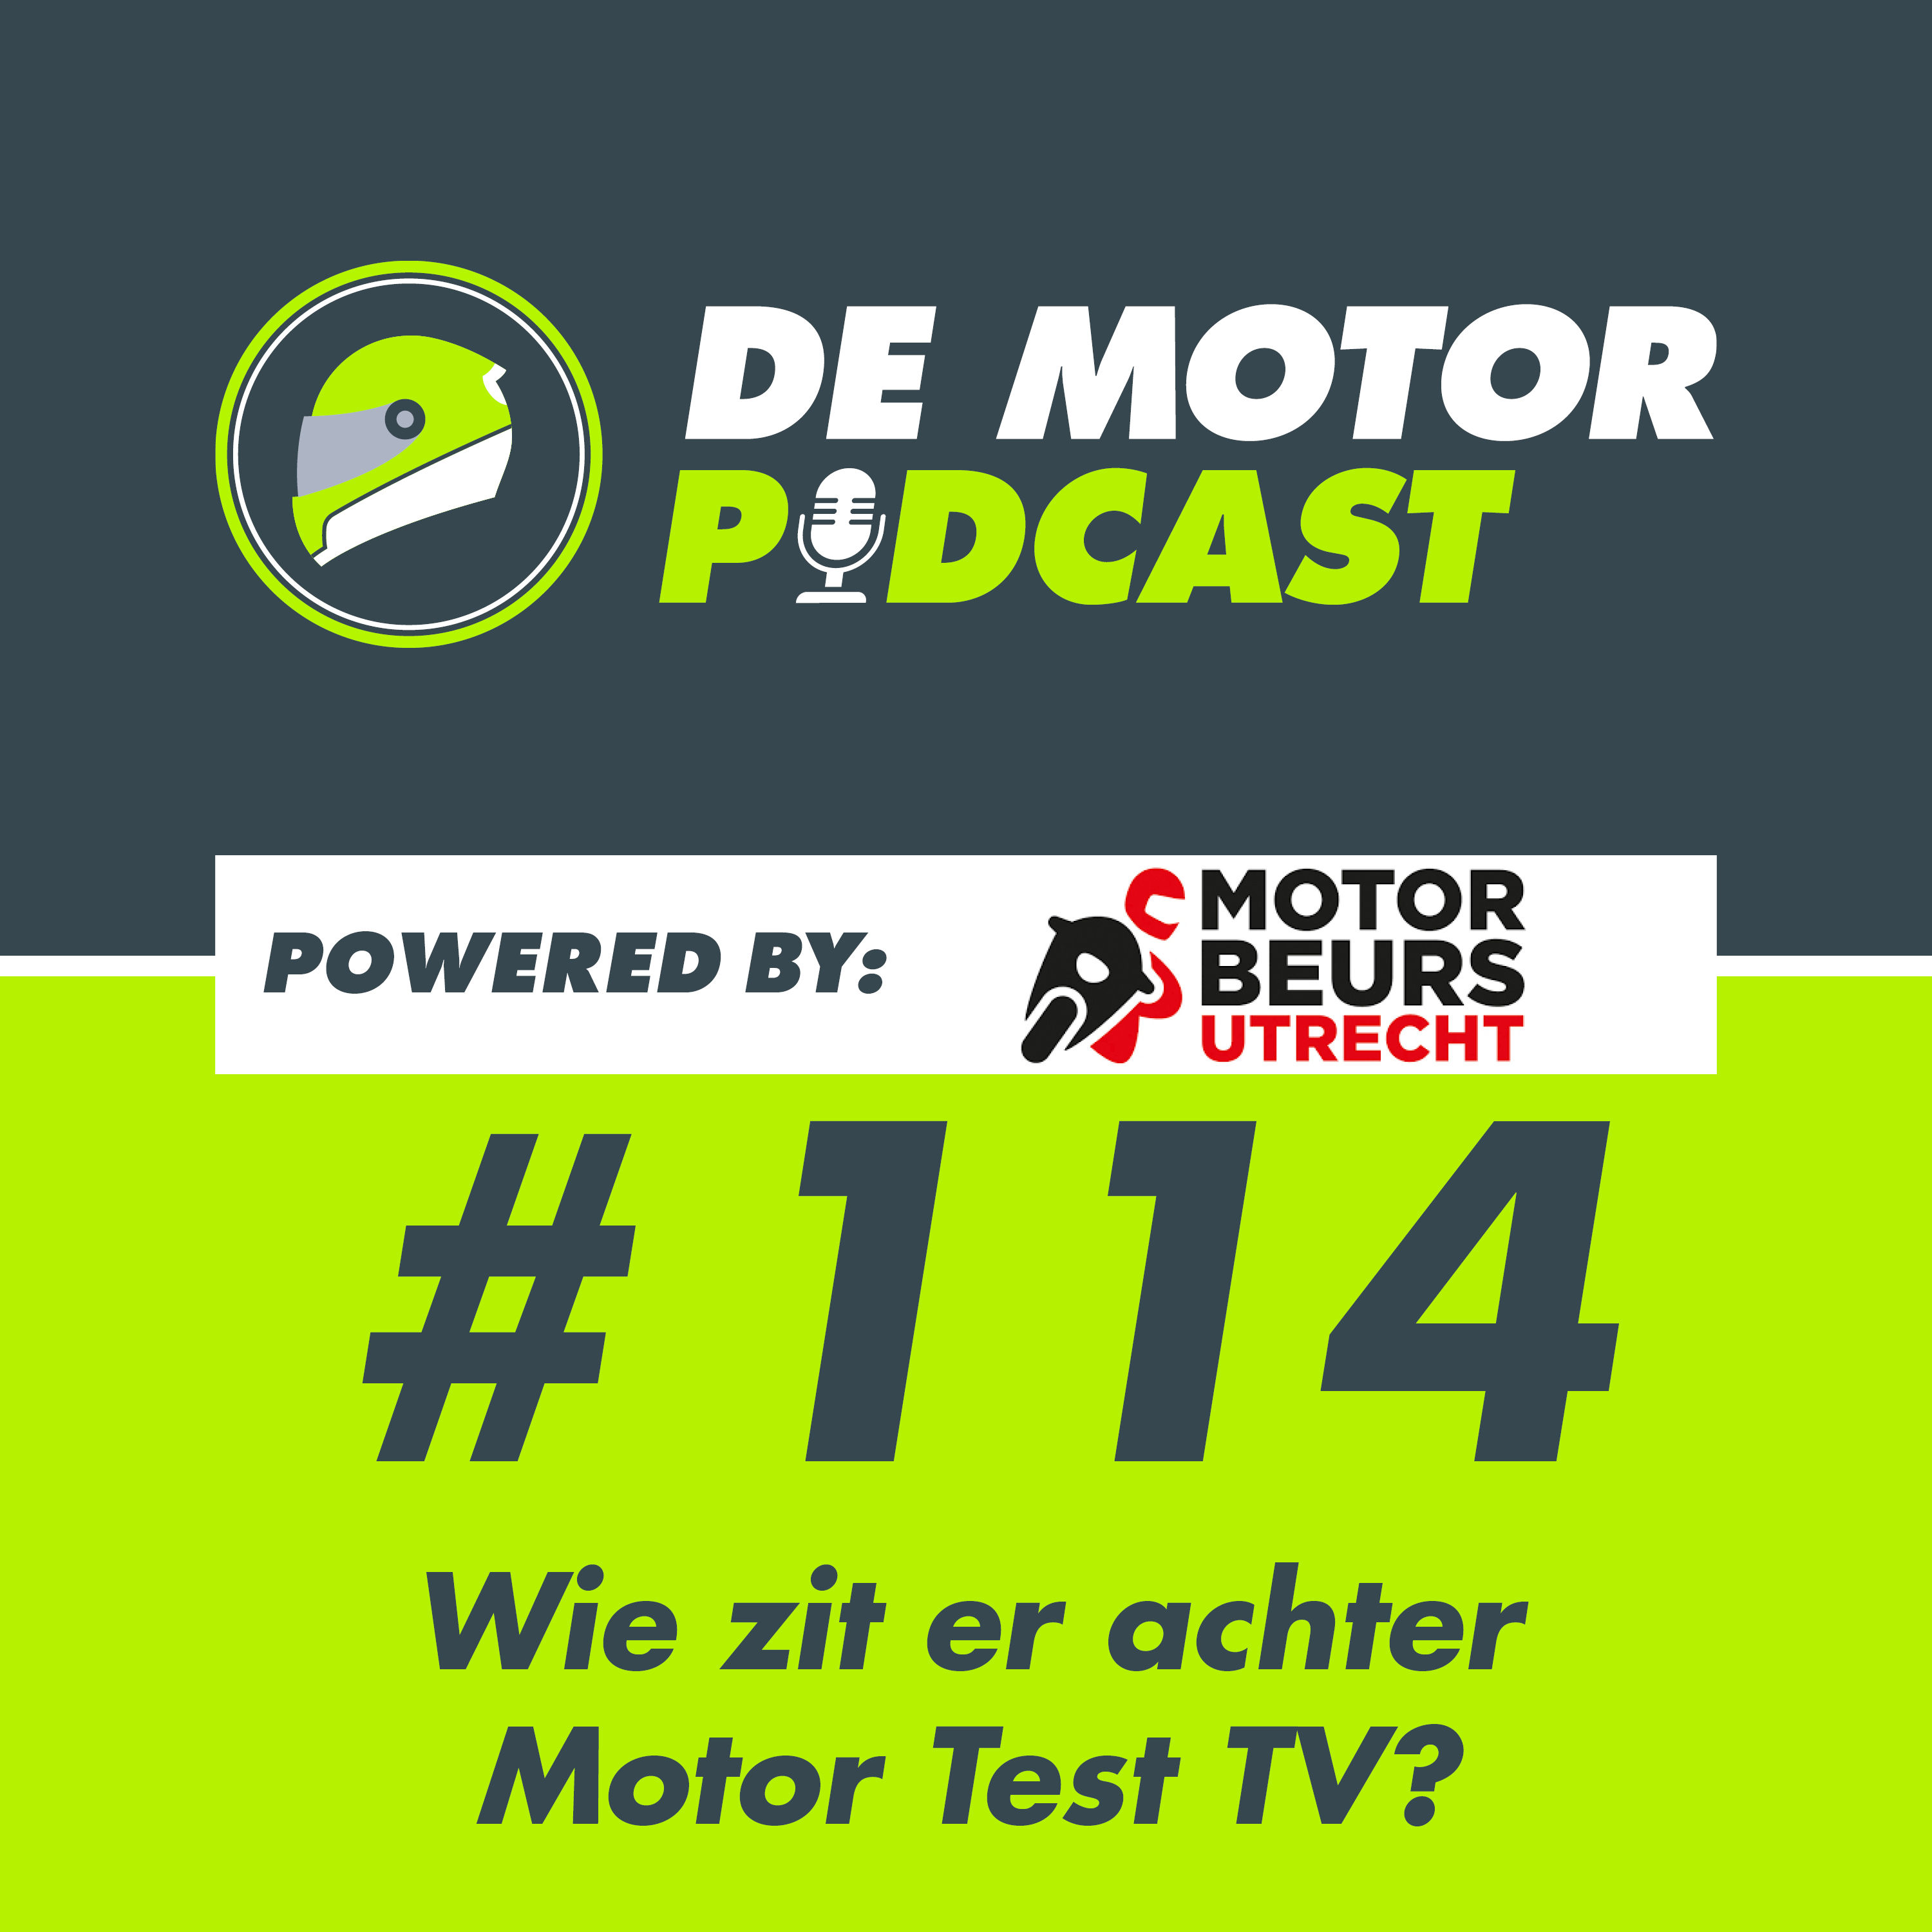 #114 Wie zit er achter Motor Test TV?